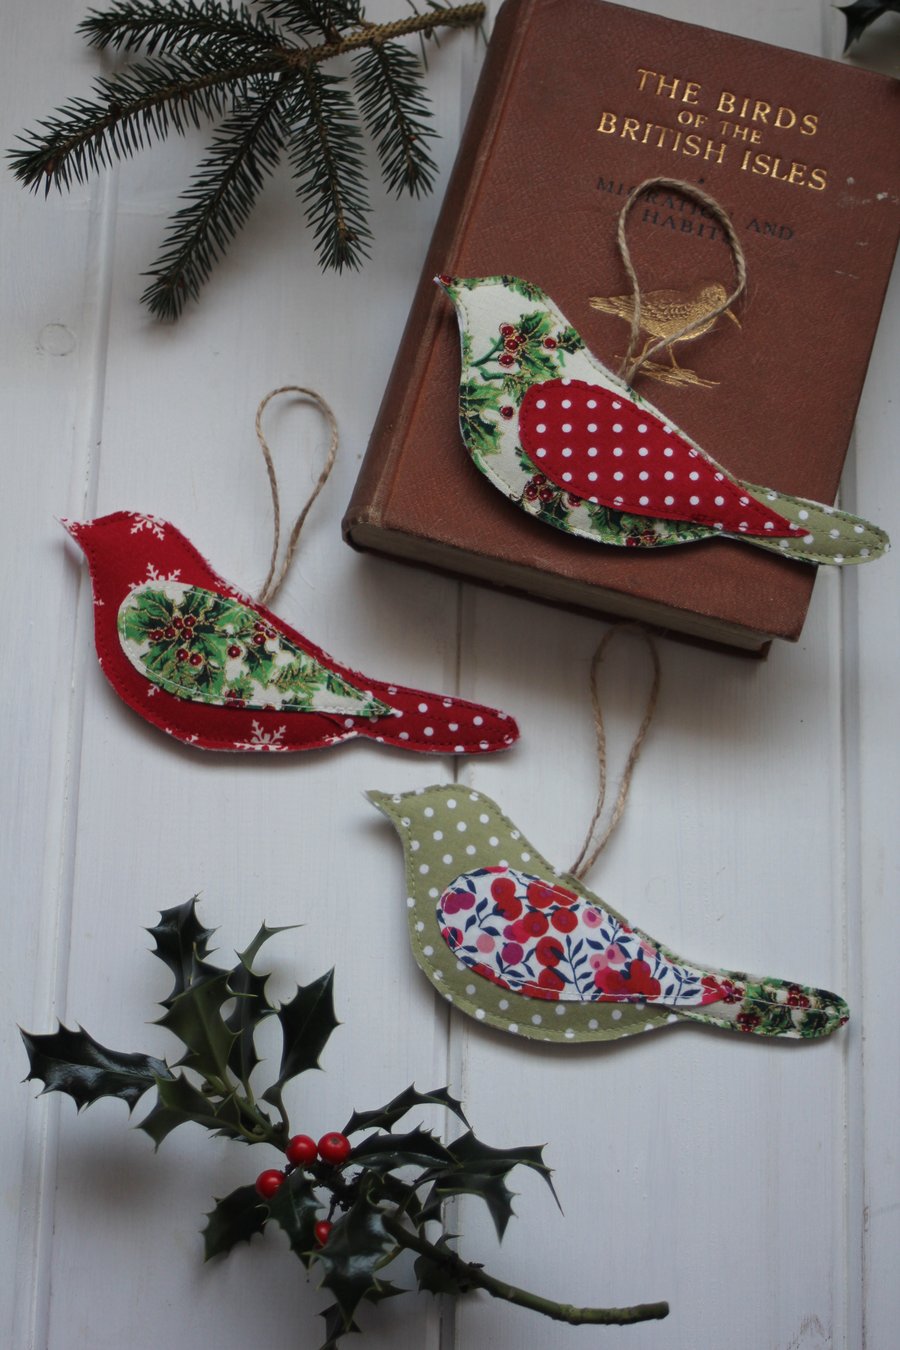 Festive 'Holly Berries' fabric hanging bird trio decorations